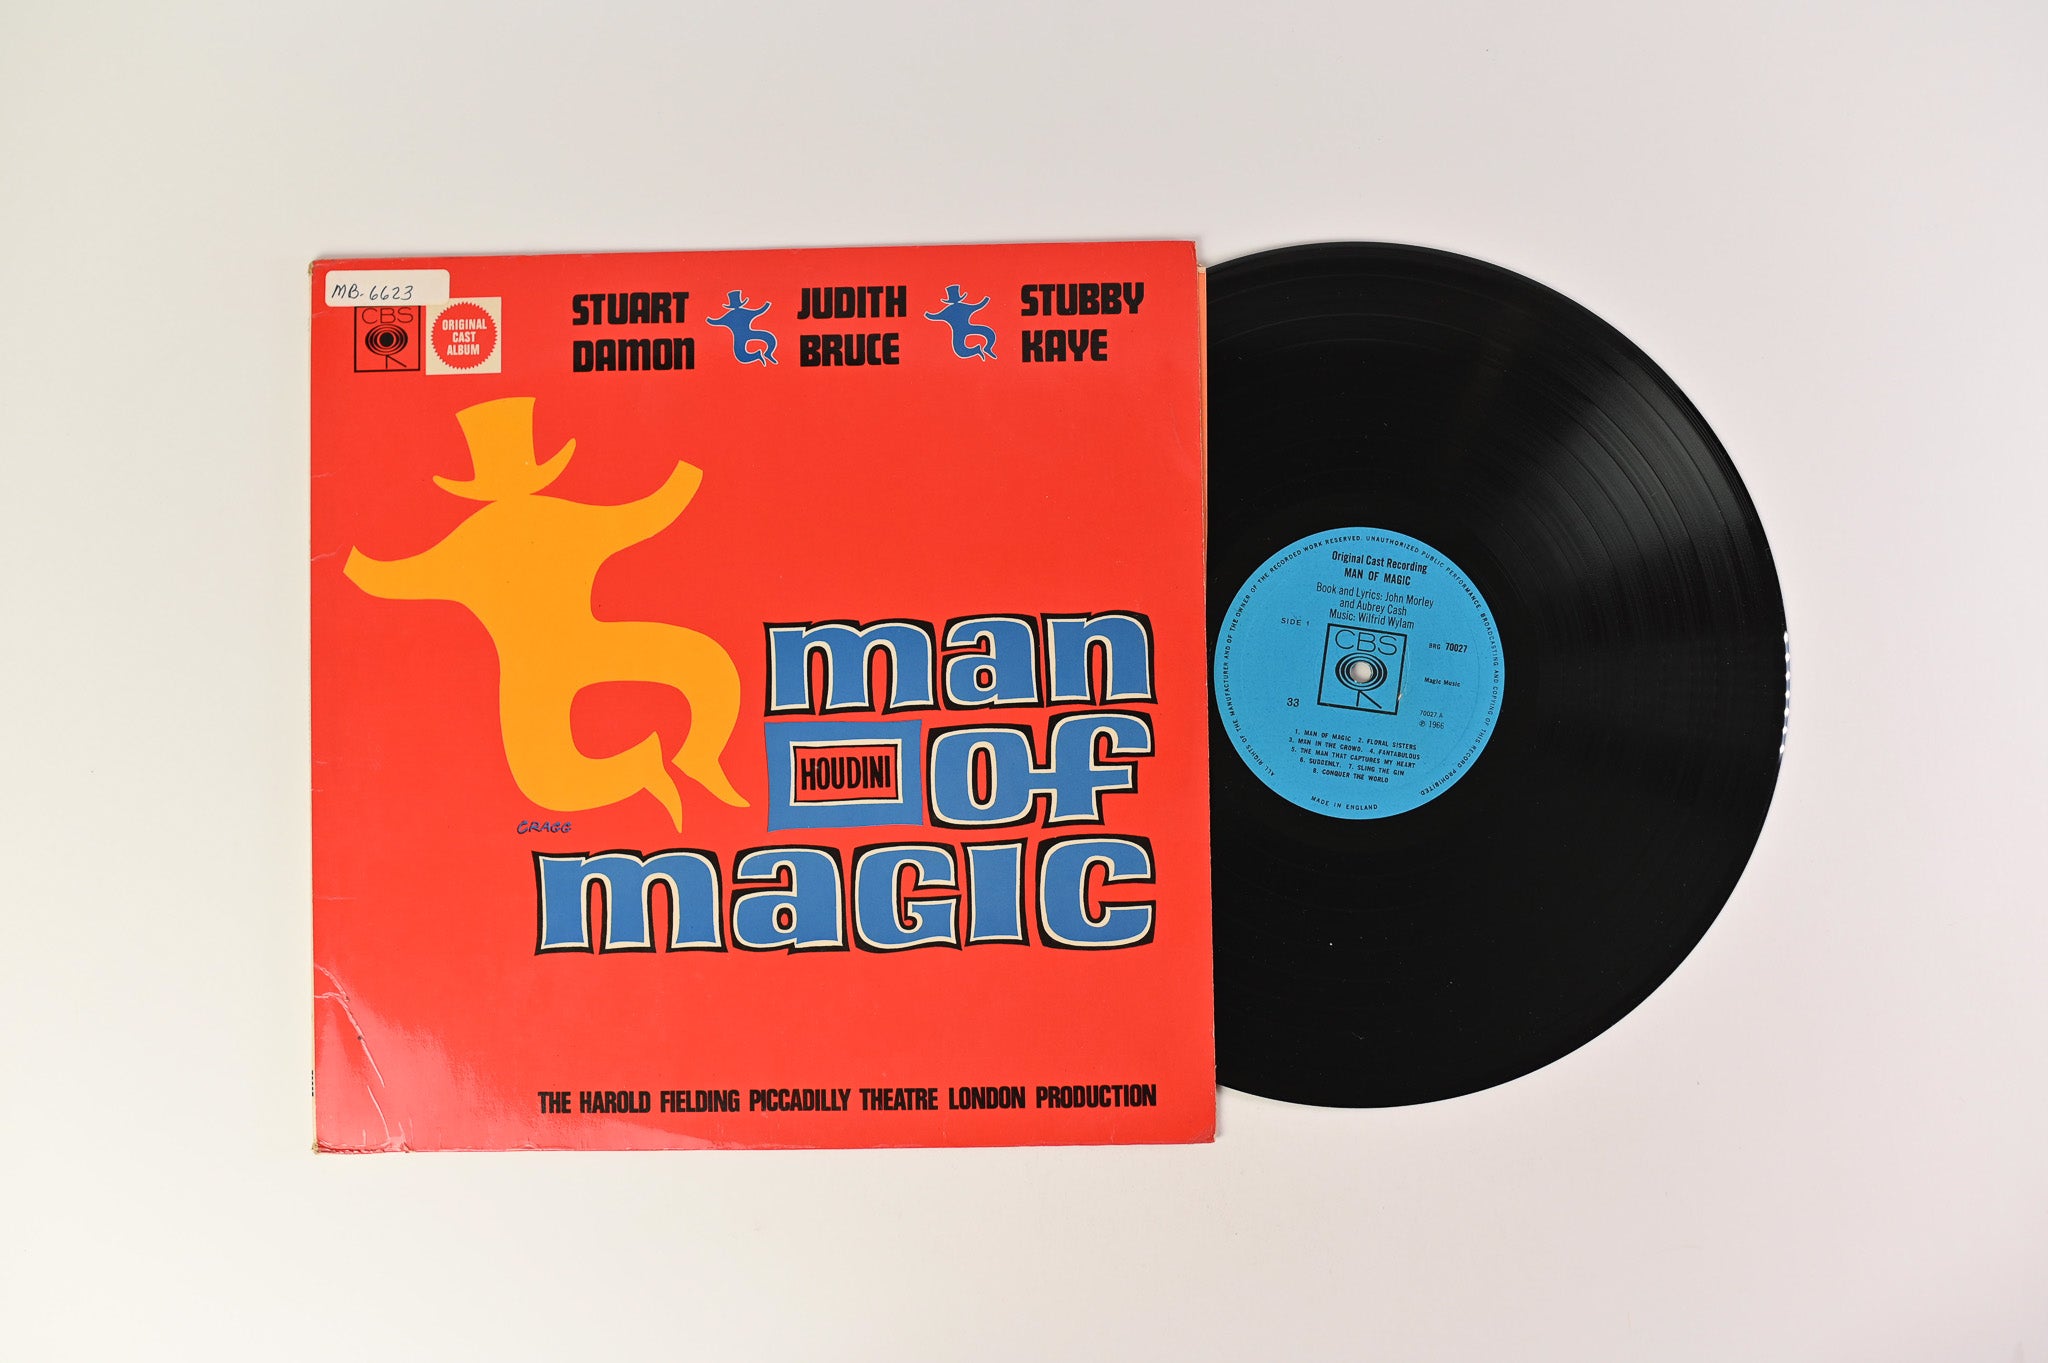 John Morley - Houdini - Man Of Magic (Original Cast Album) on CBS